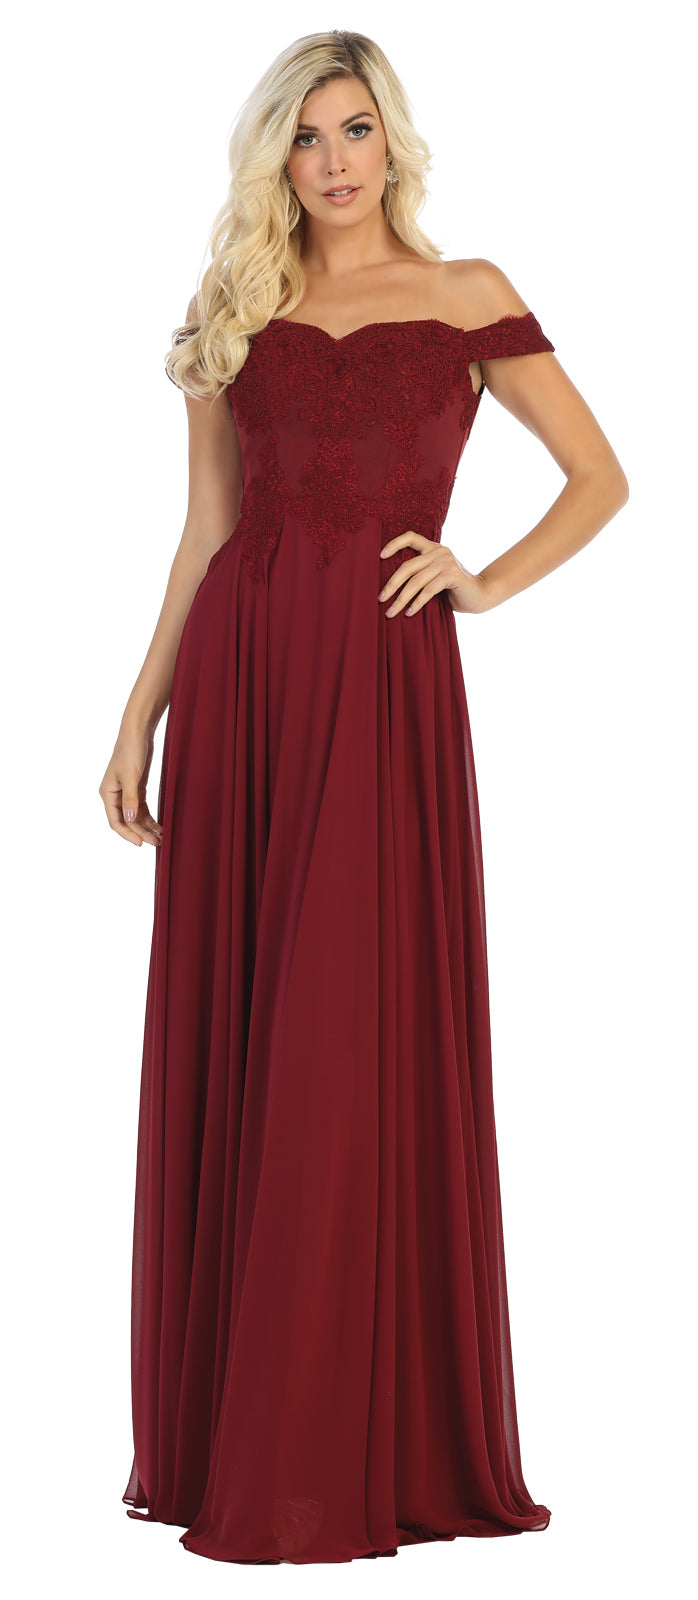 Off shoulder long pleated chiffon dress - LA1644 - Burgundy - LA Merchandise